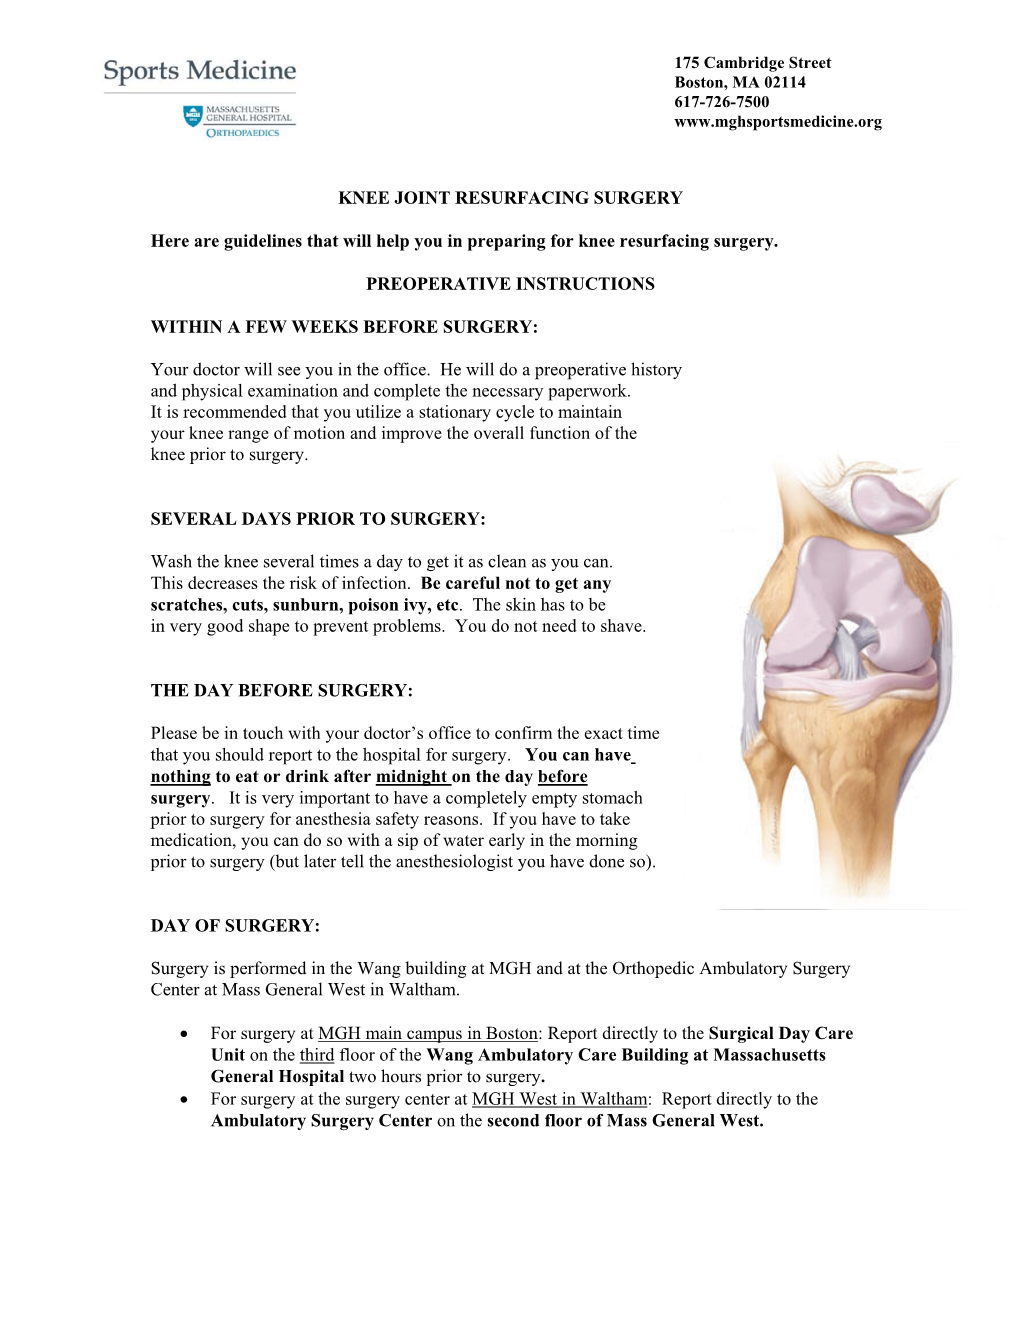 Knee Joint Resurfacing Surgery